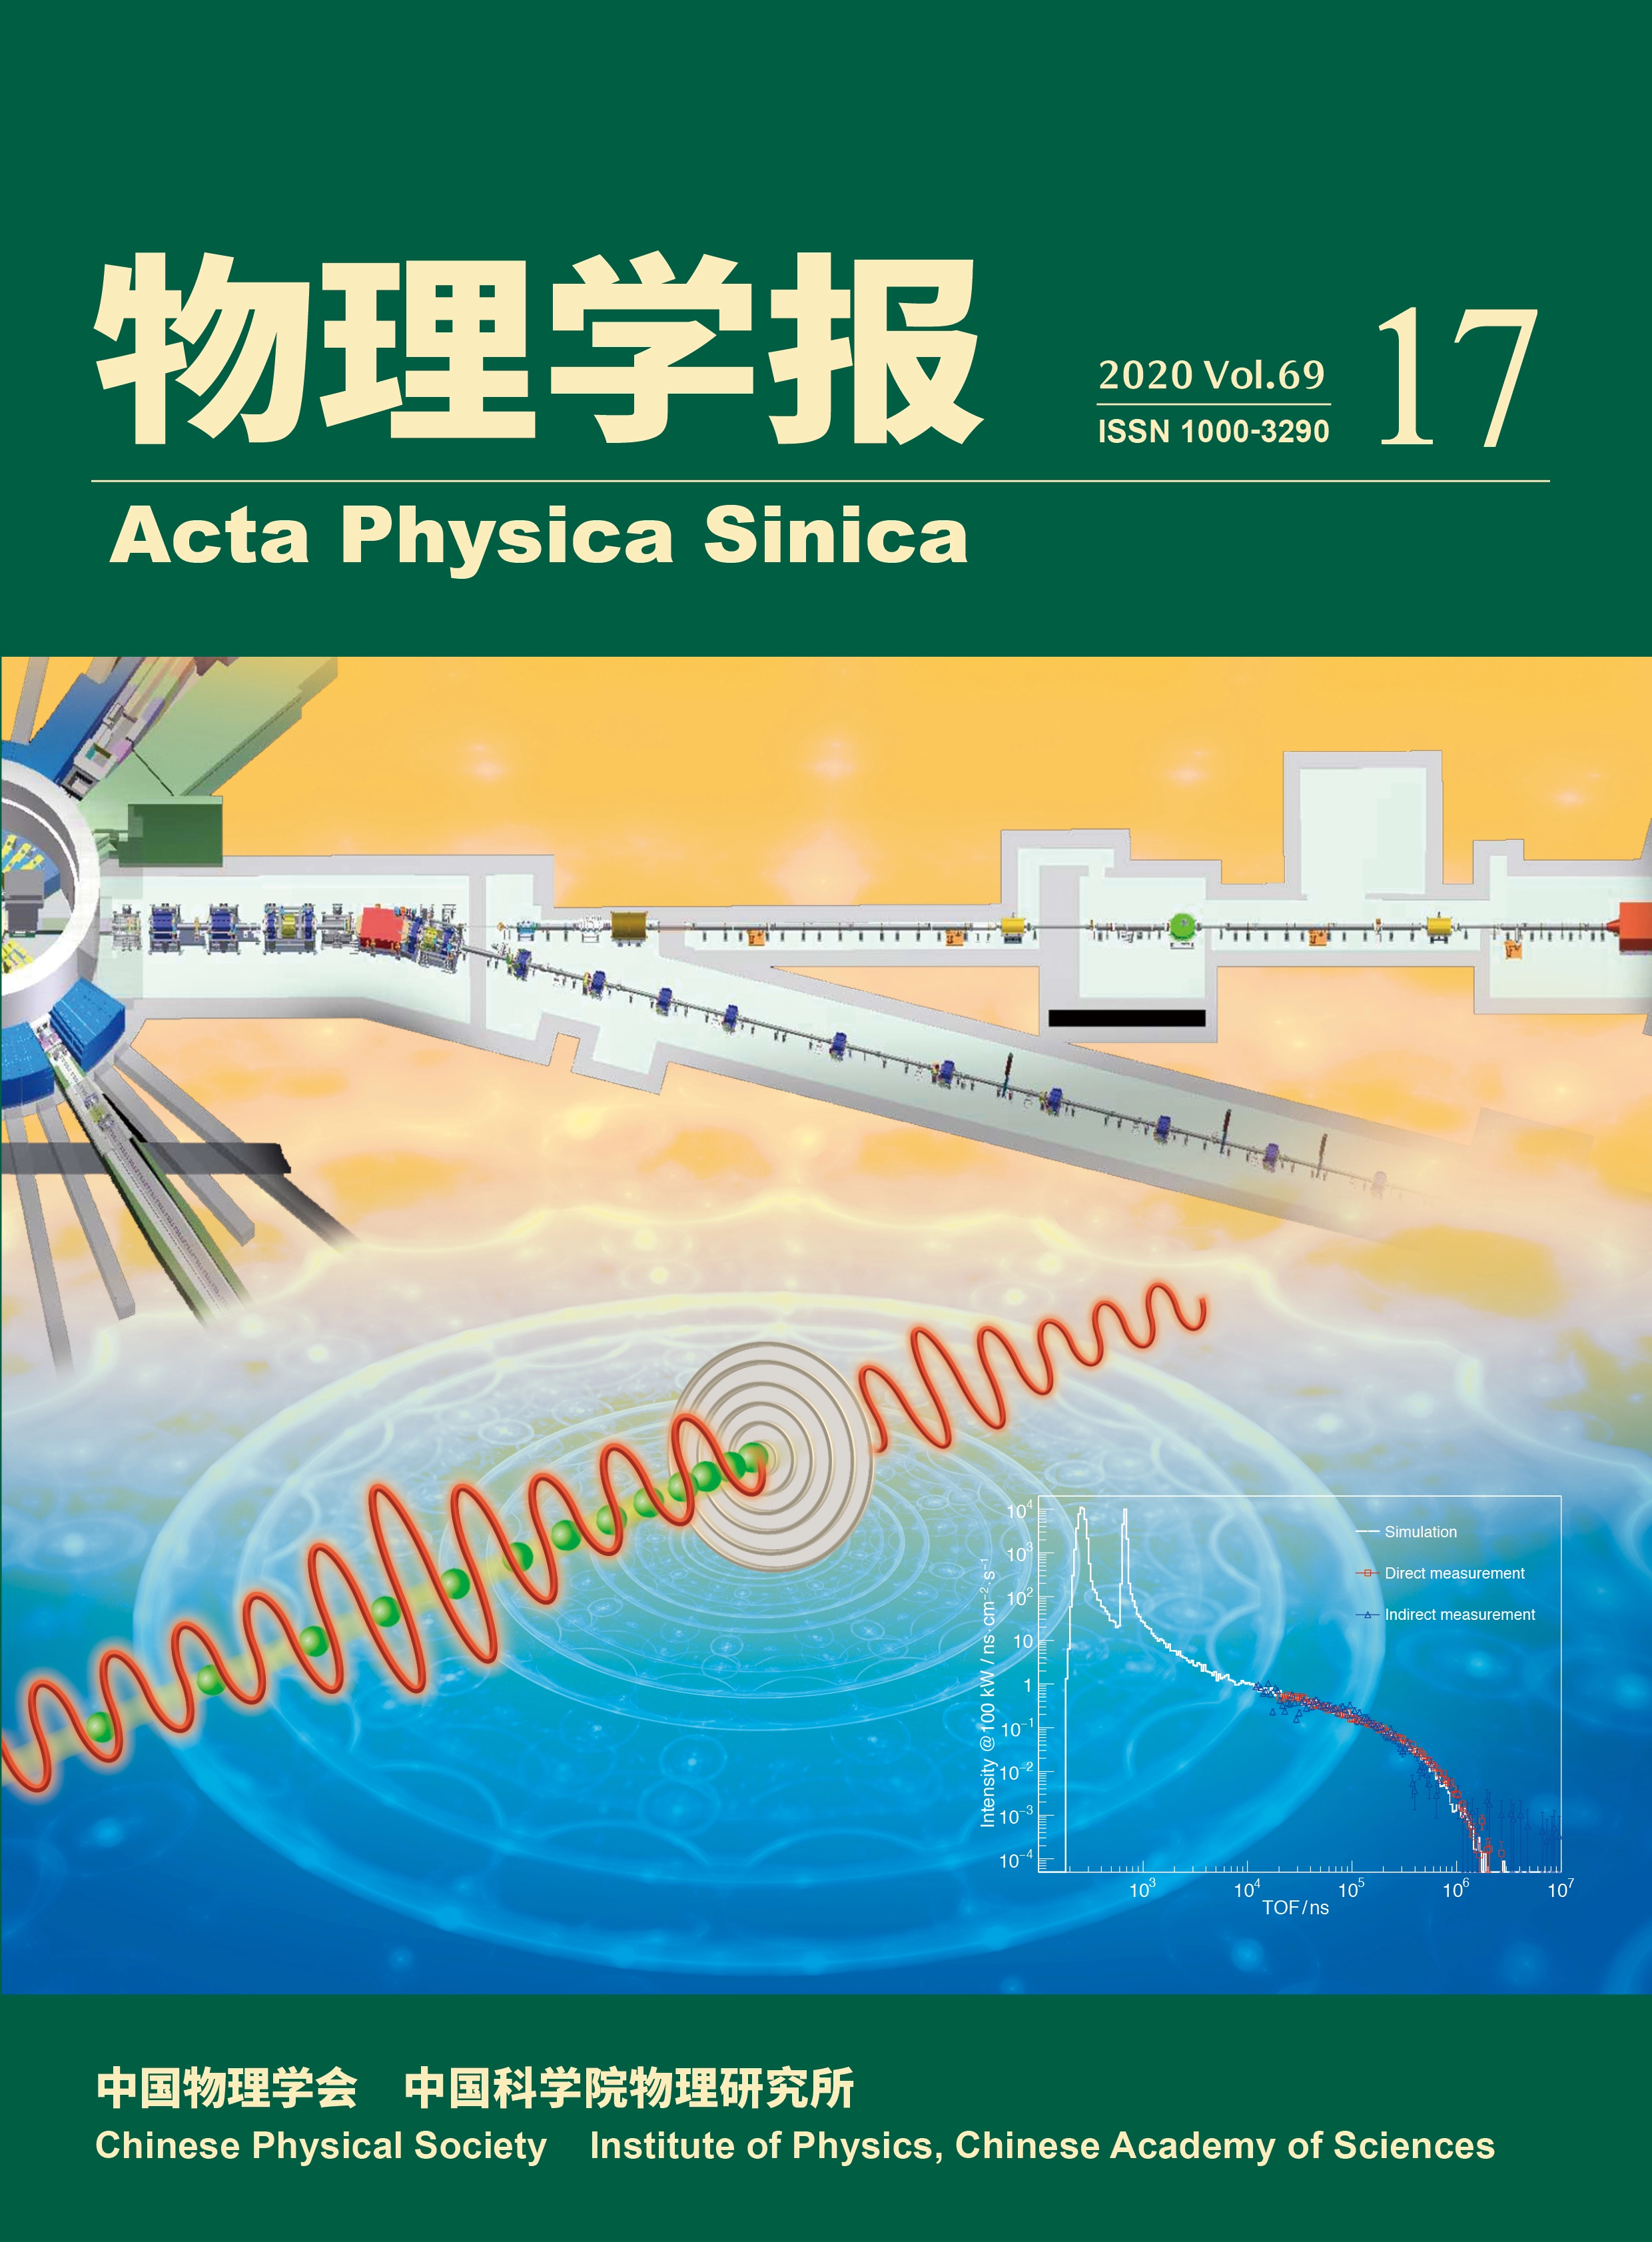 Acta Physica Sinica